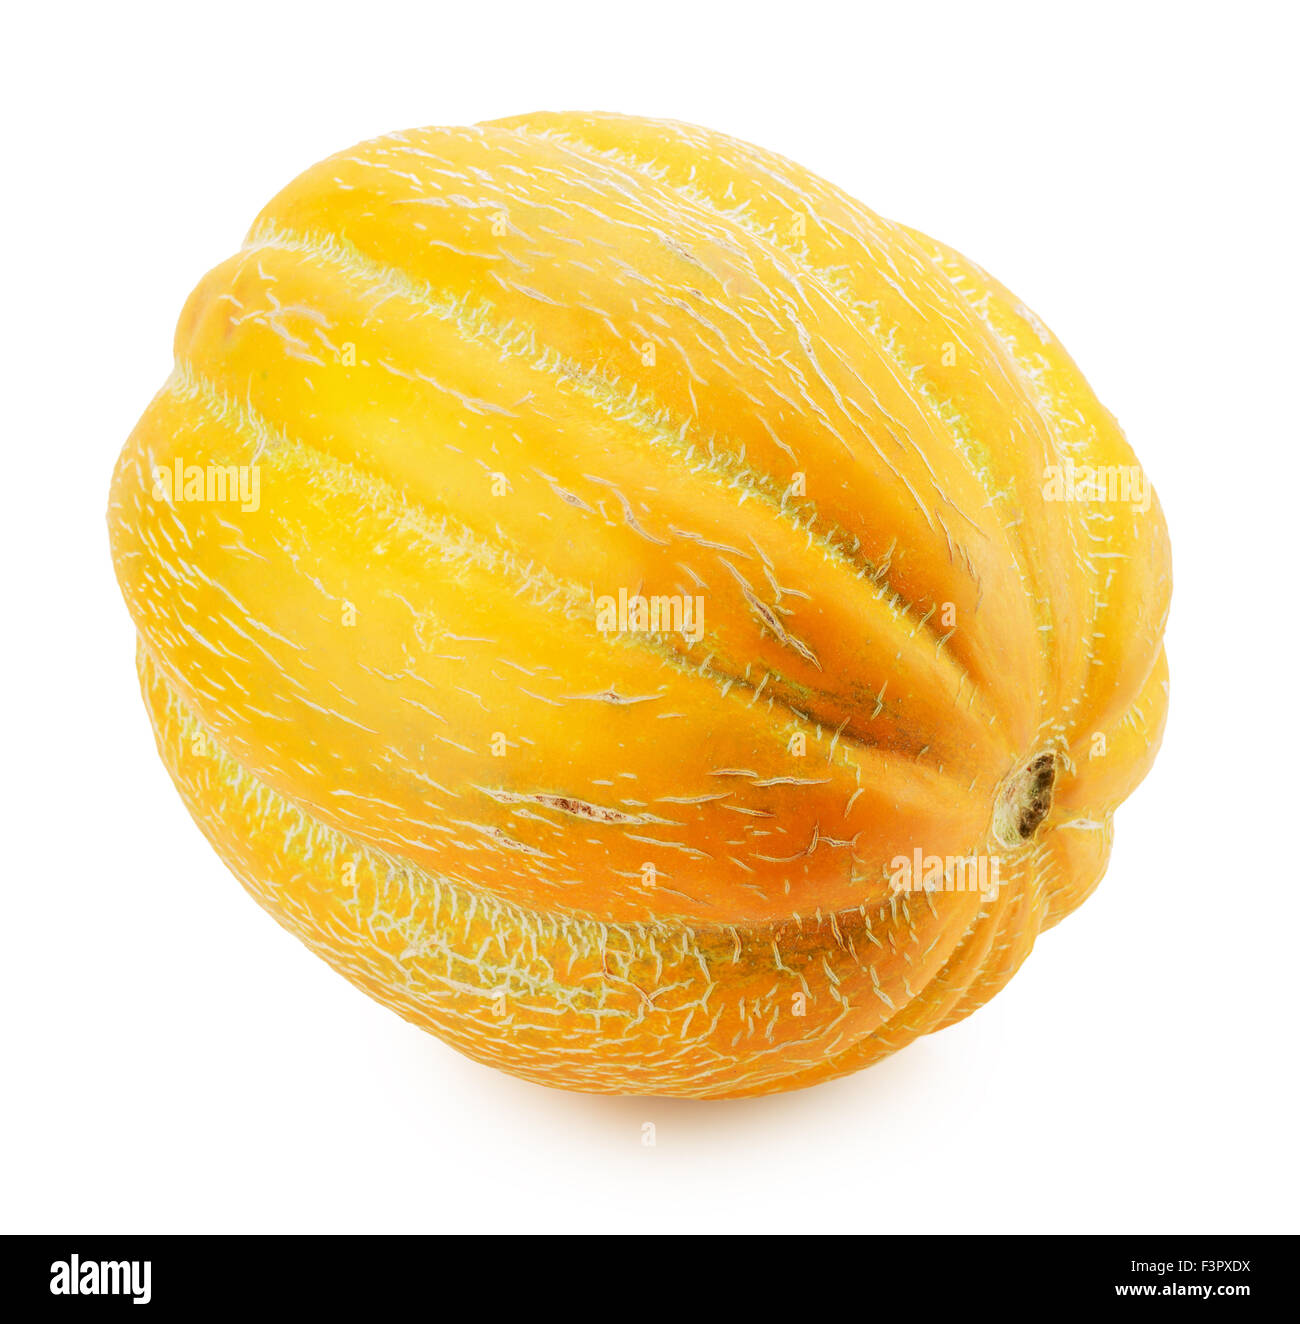 ripe melon on the white background. Stock Photo